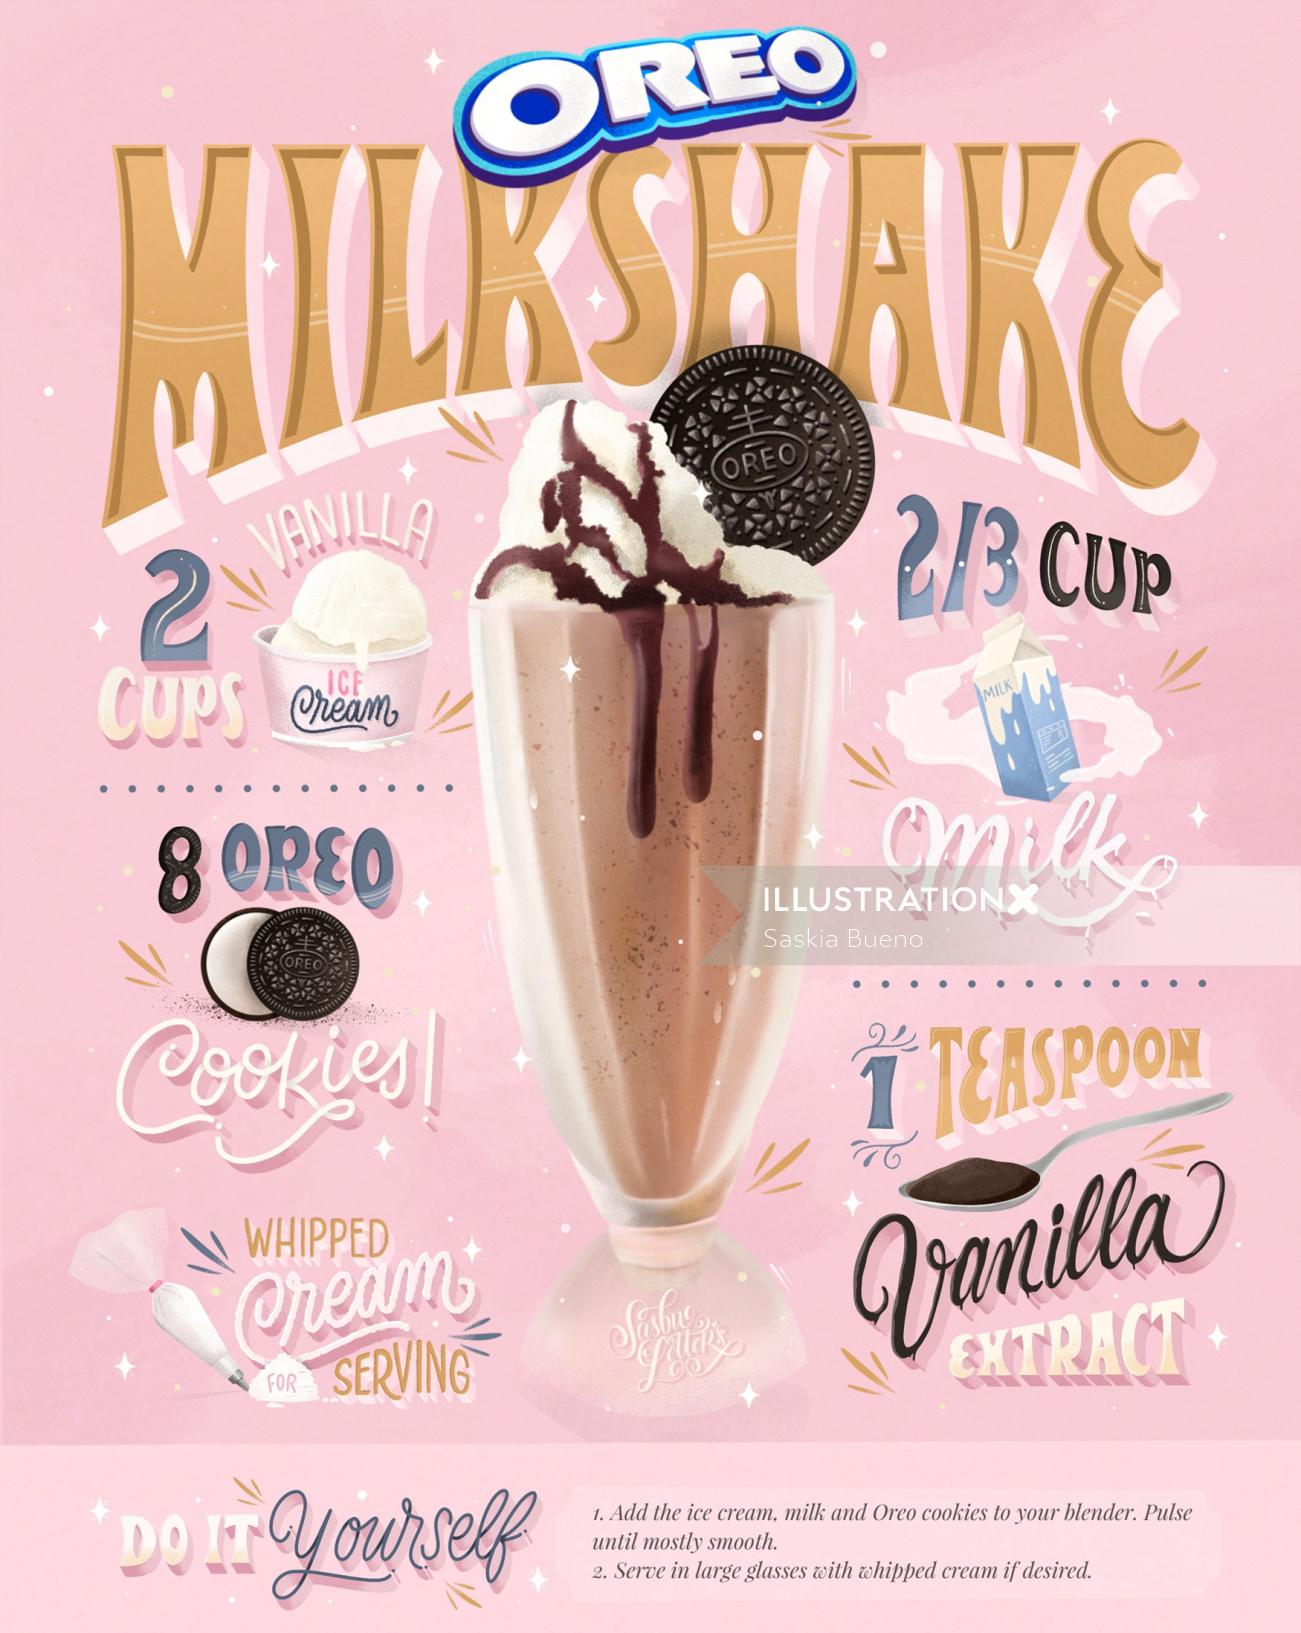 Digital painting of oreo milkshake 